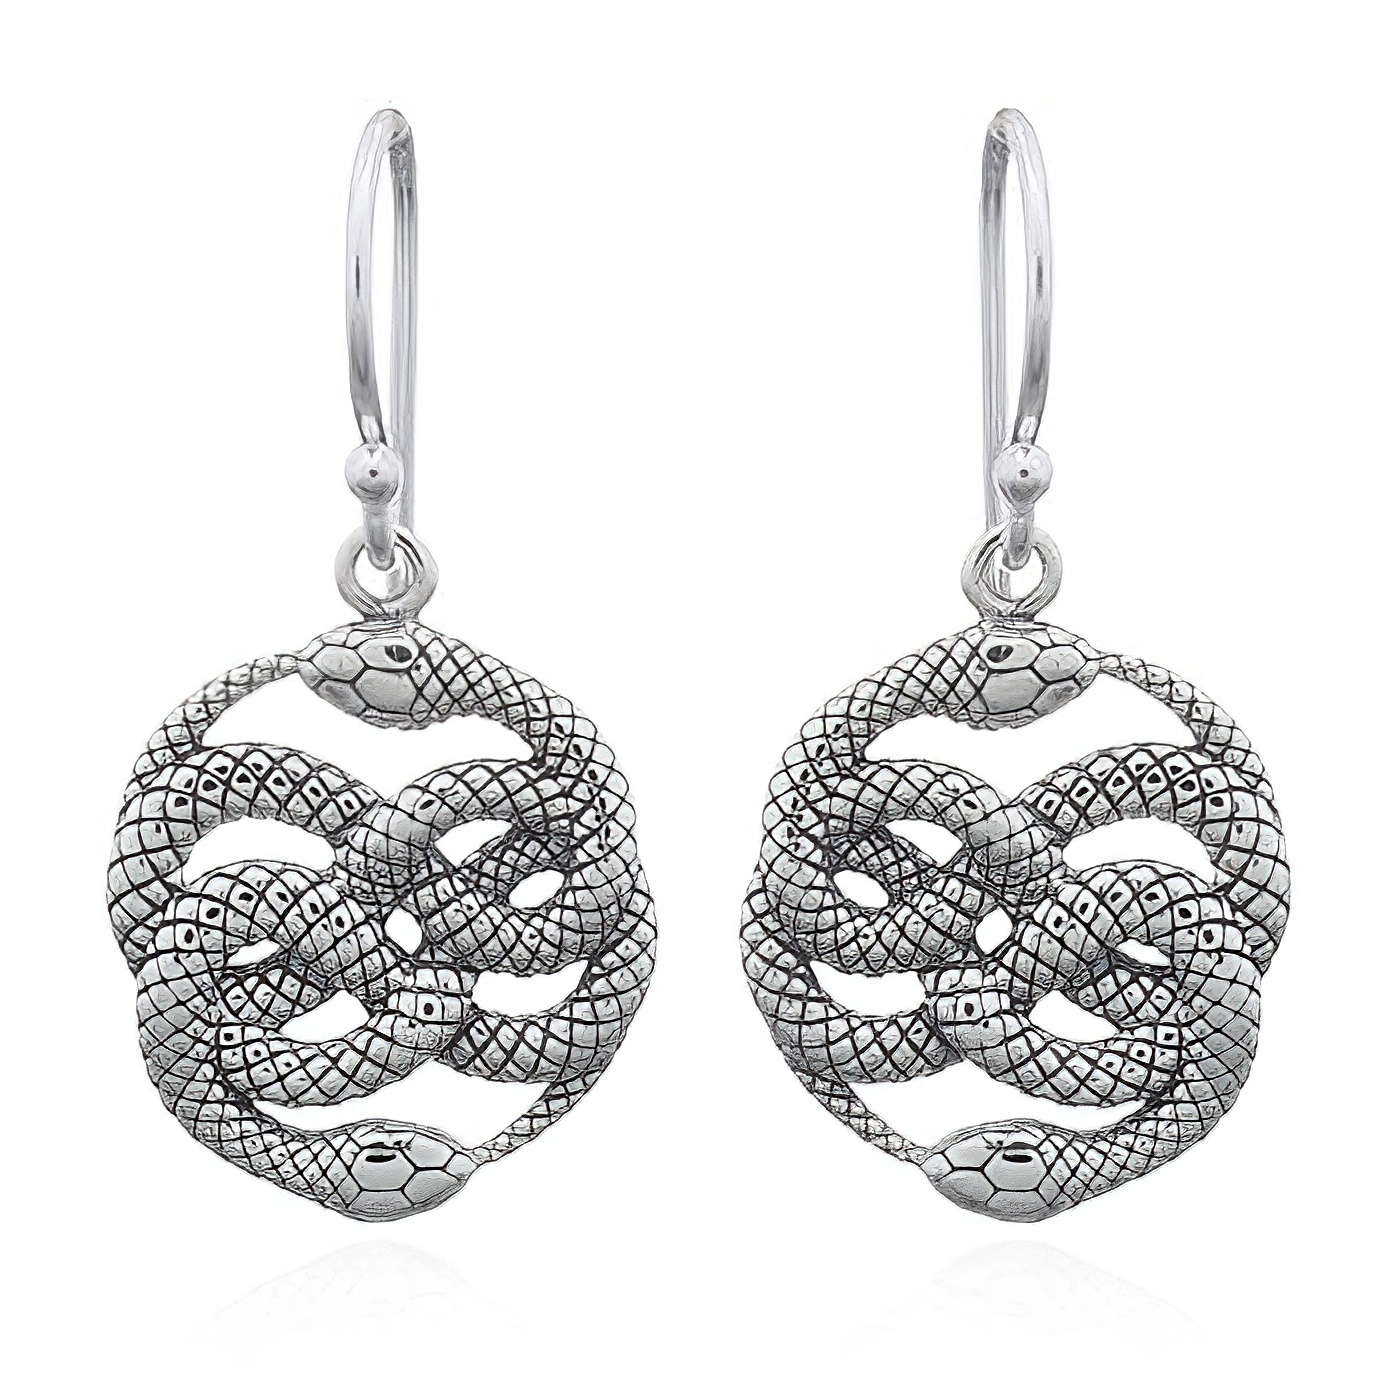 Twirled Snakes 925 Sterling Silver Dangle Earrings by BeYindi 